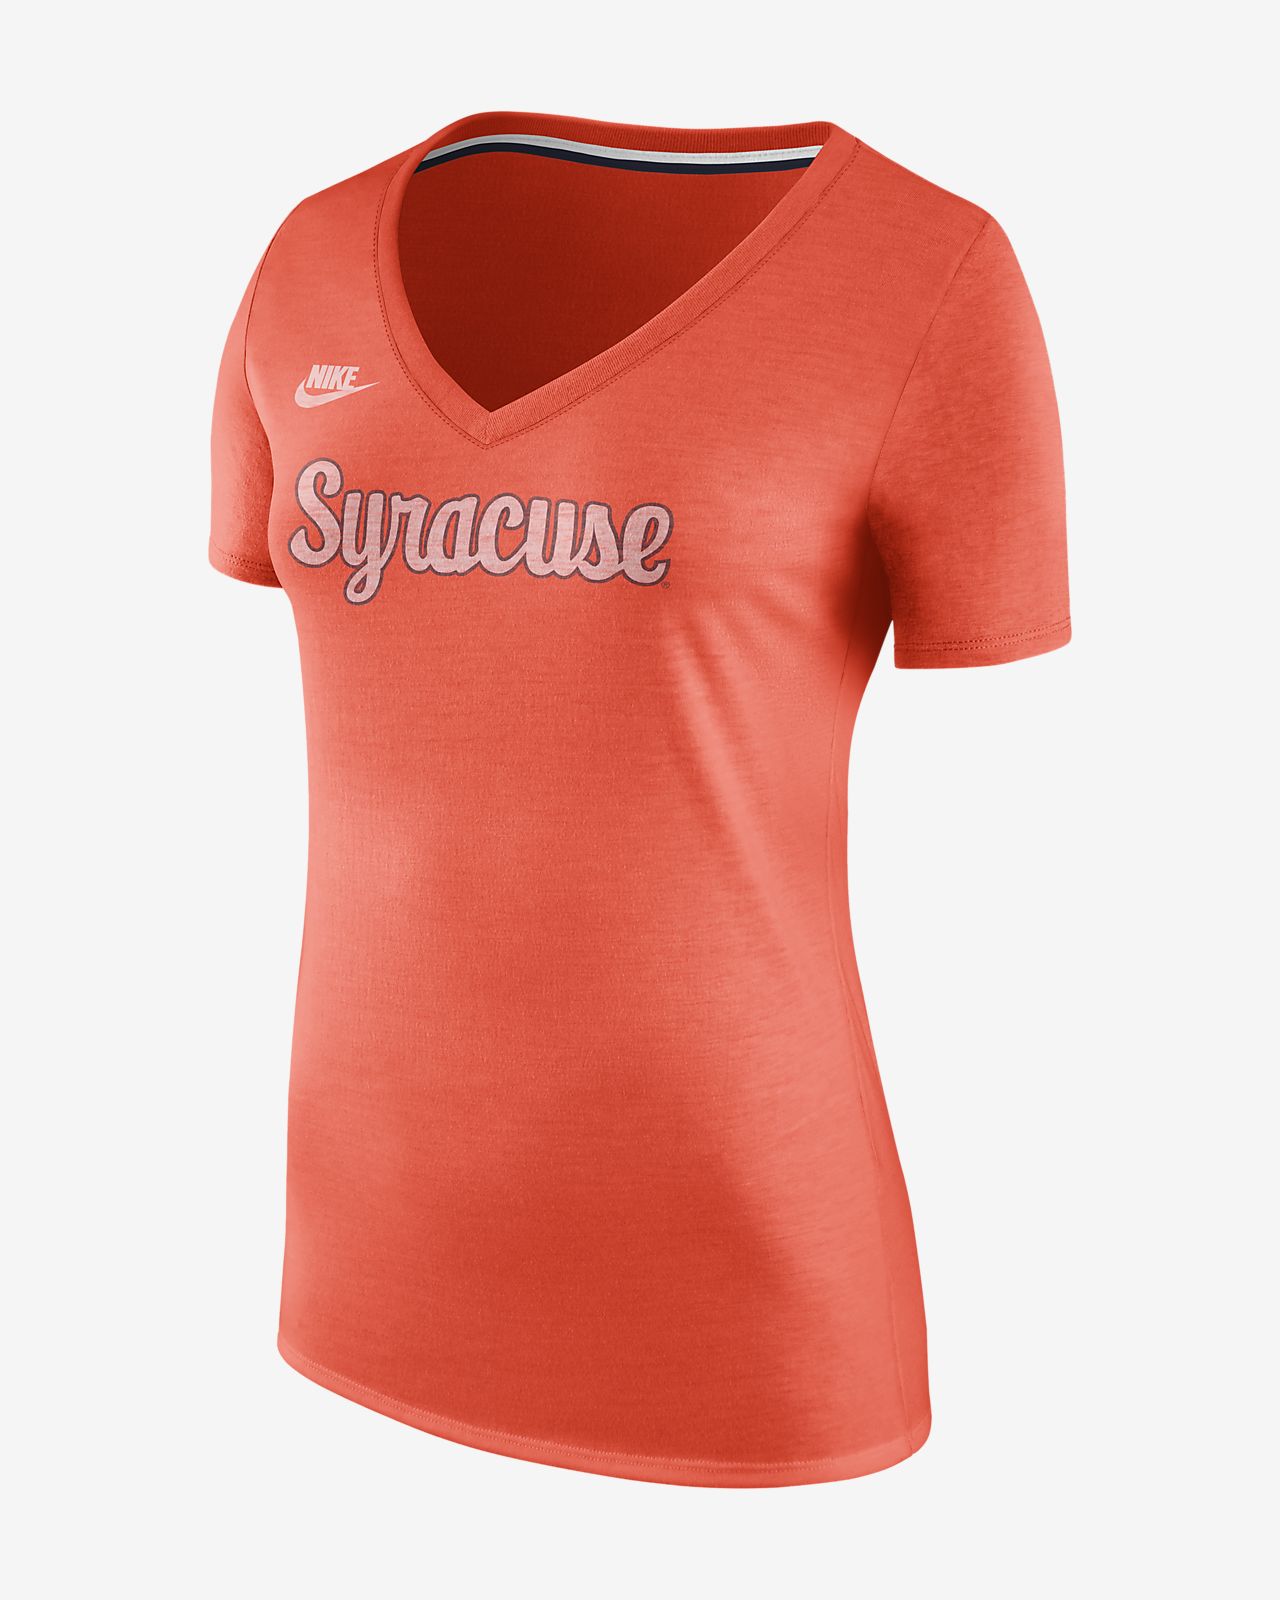 Nike College (Syracuse) Women's V-Neck T-Shirt. Nike.com